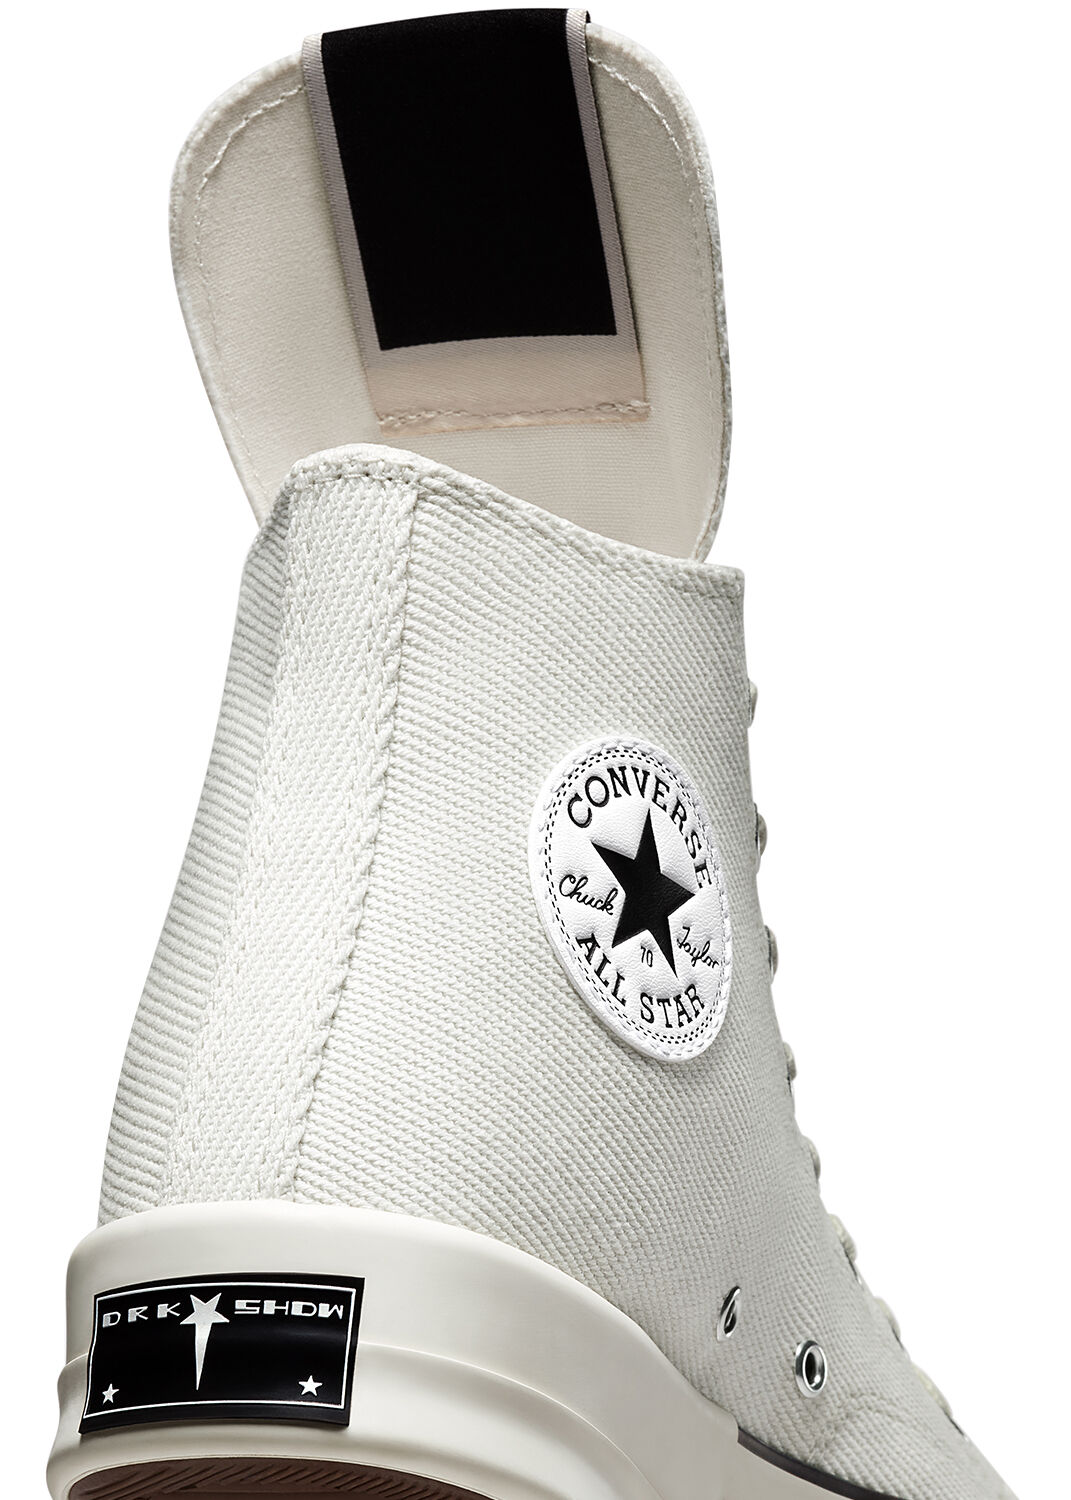 Rick Owens Gummi Converse X DRKSHDW Sneakers DRKSTAR HI in Weiß für Herren Herren Schuhe Sneaker Hoch Geschnittene Sneaker 